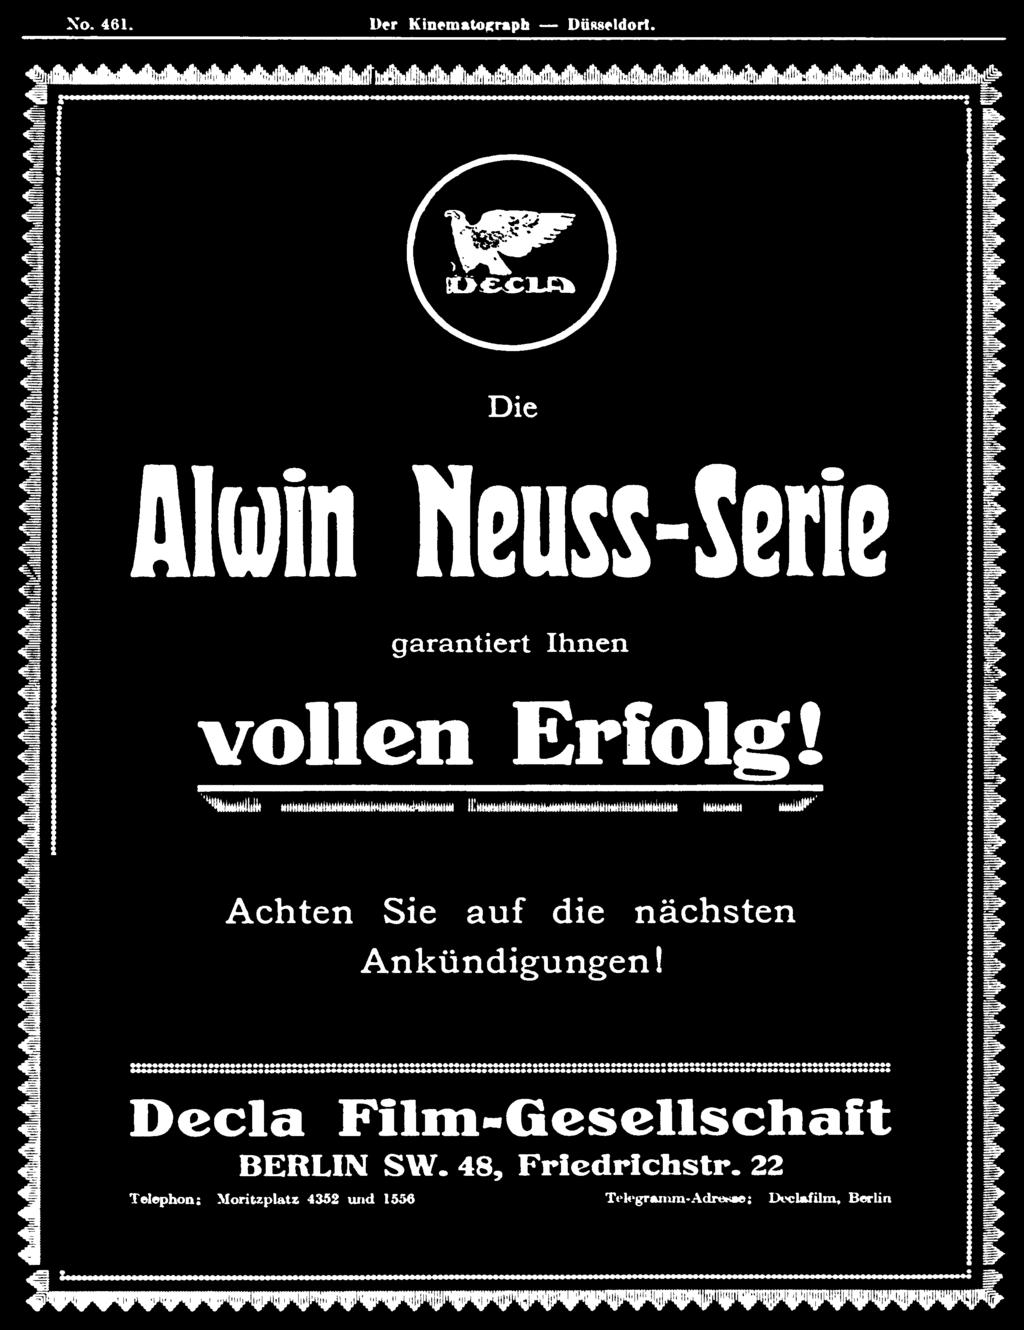 Decla Film-Gesellschaft BERLIN SW.